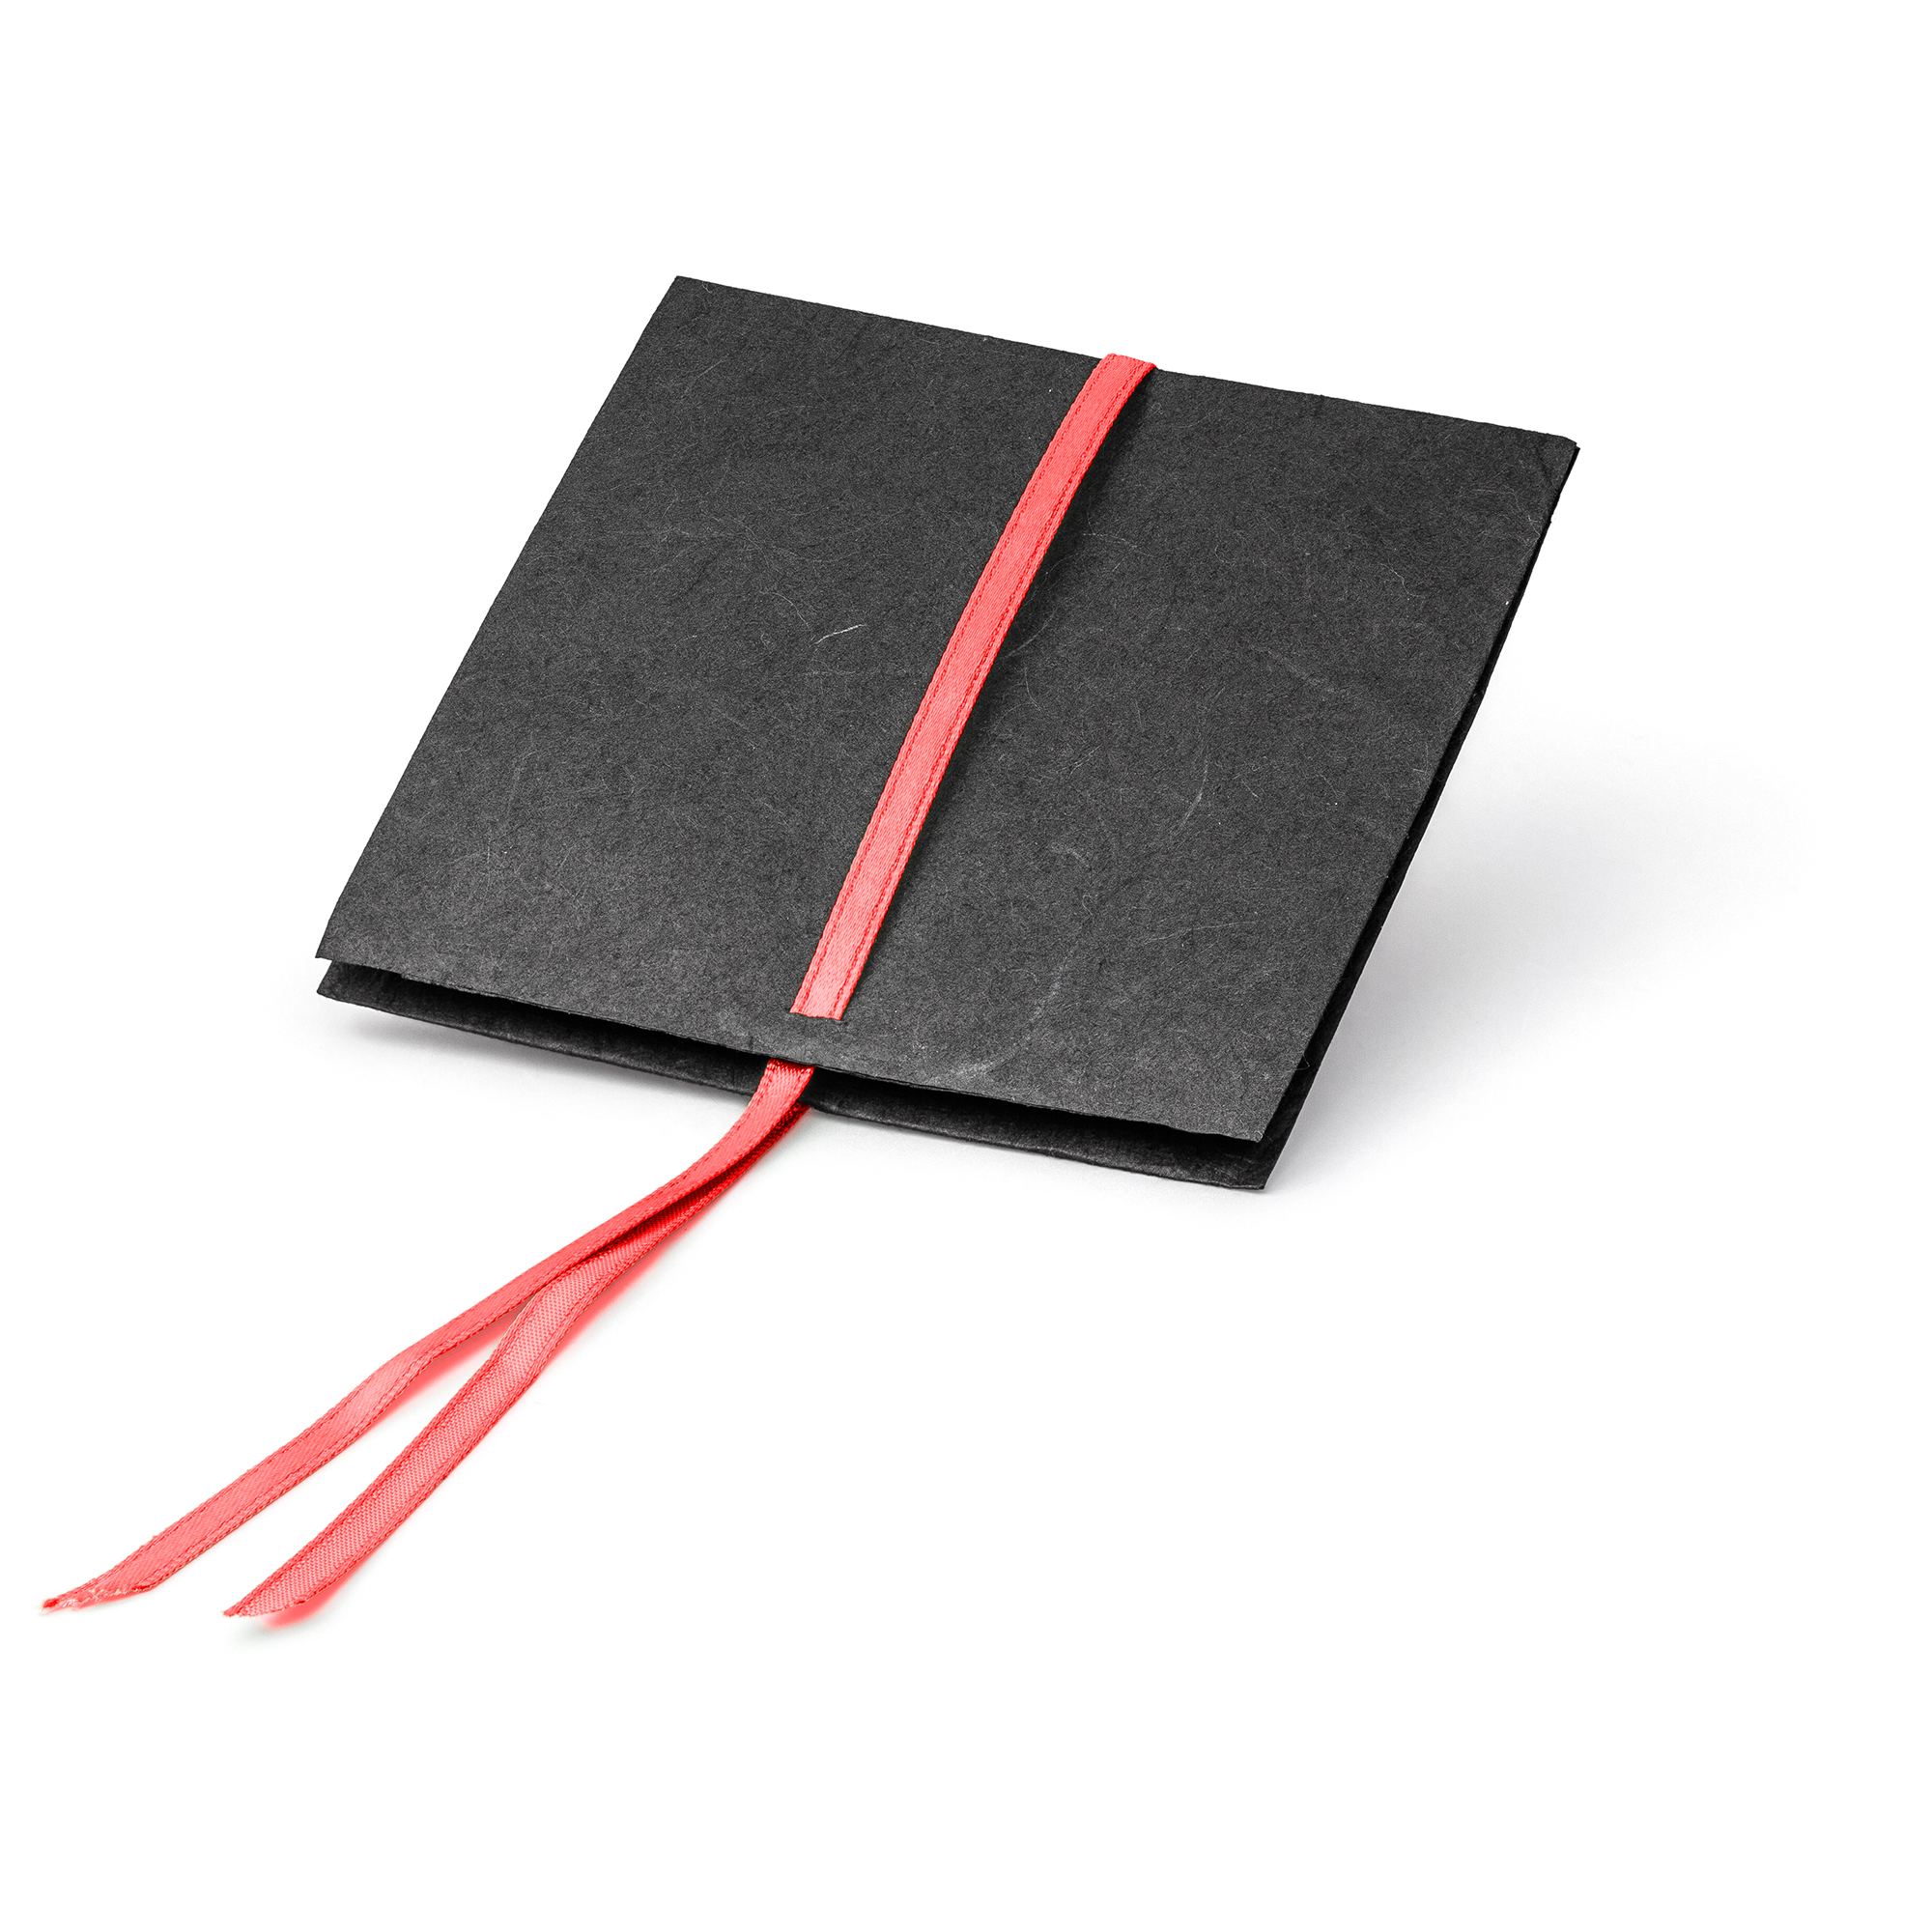 Paperbag groß, 100 x 100 mm, schwarz/rotes Band